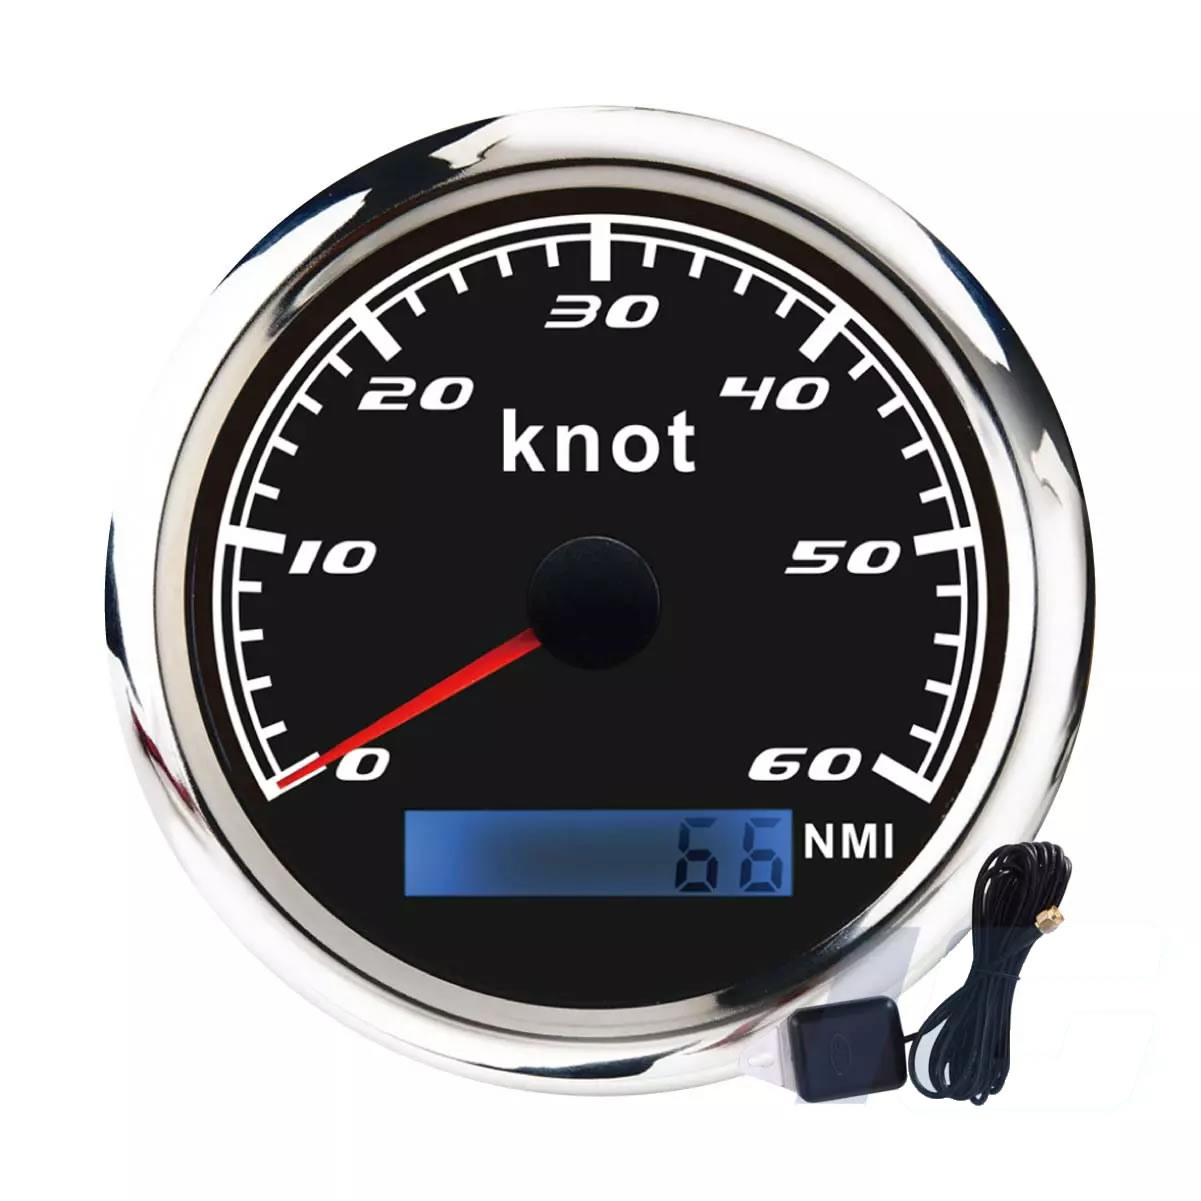 marine speedometers gauges